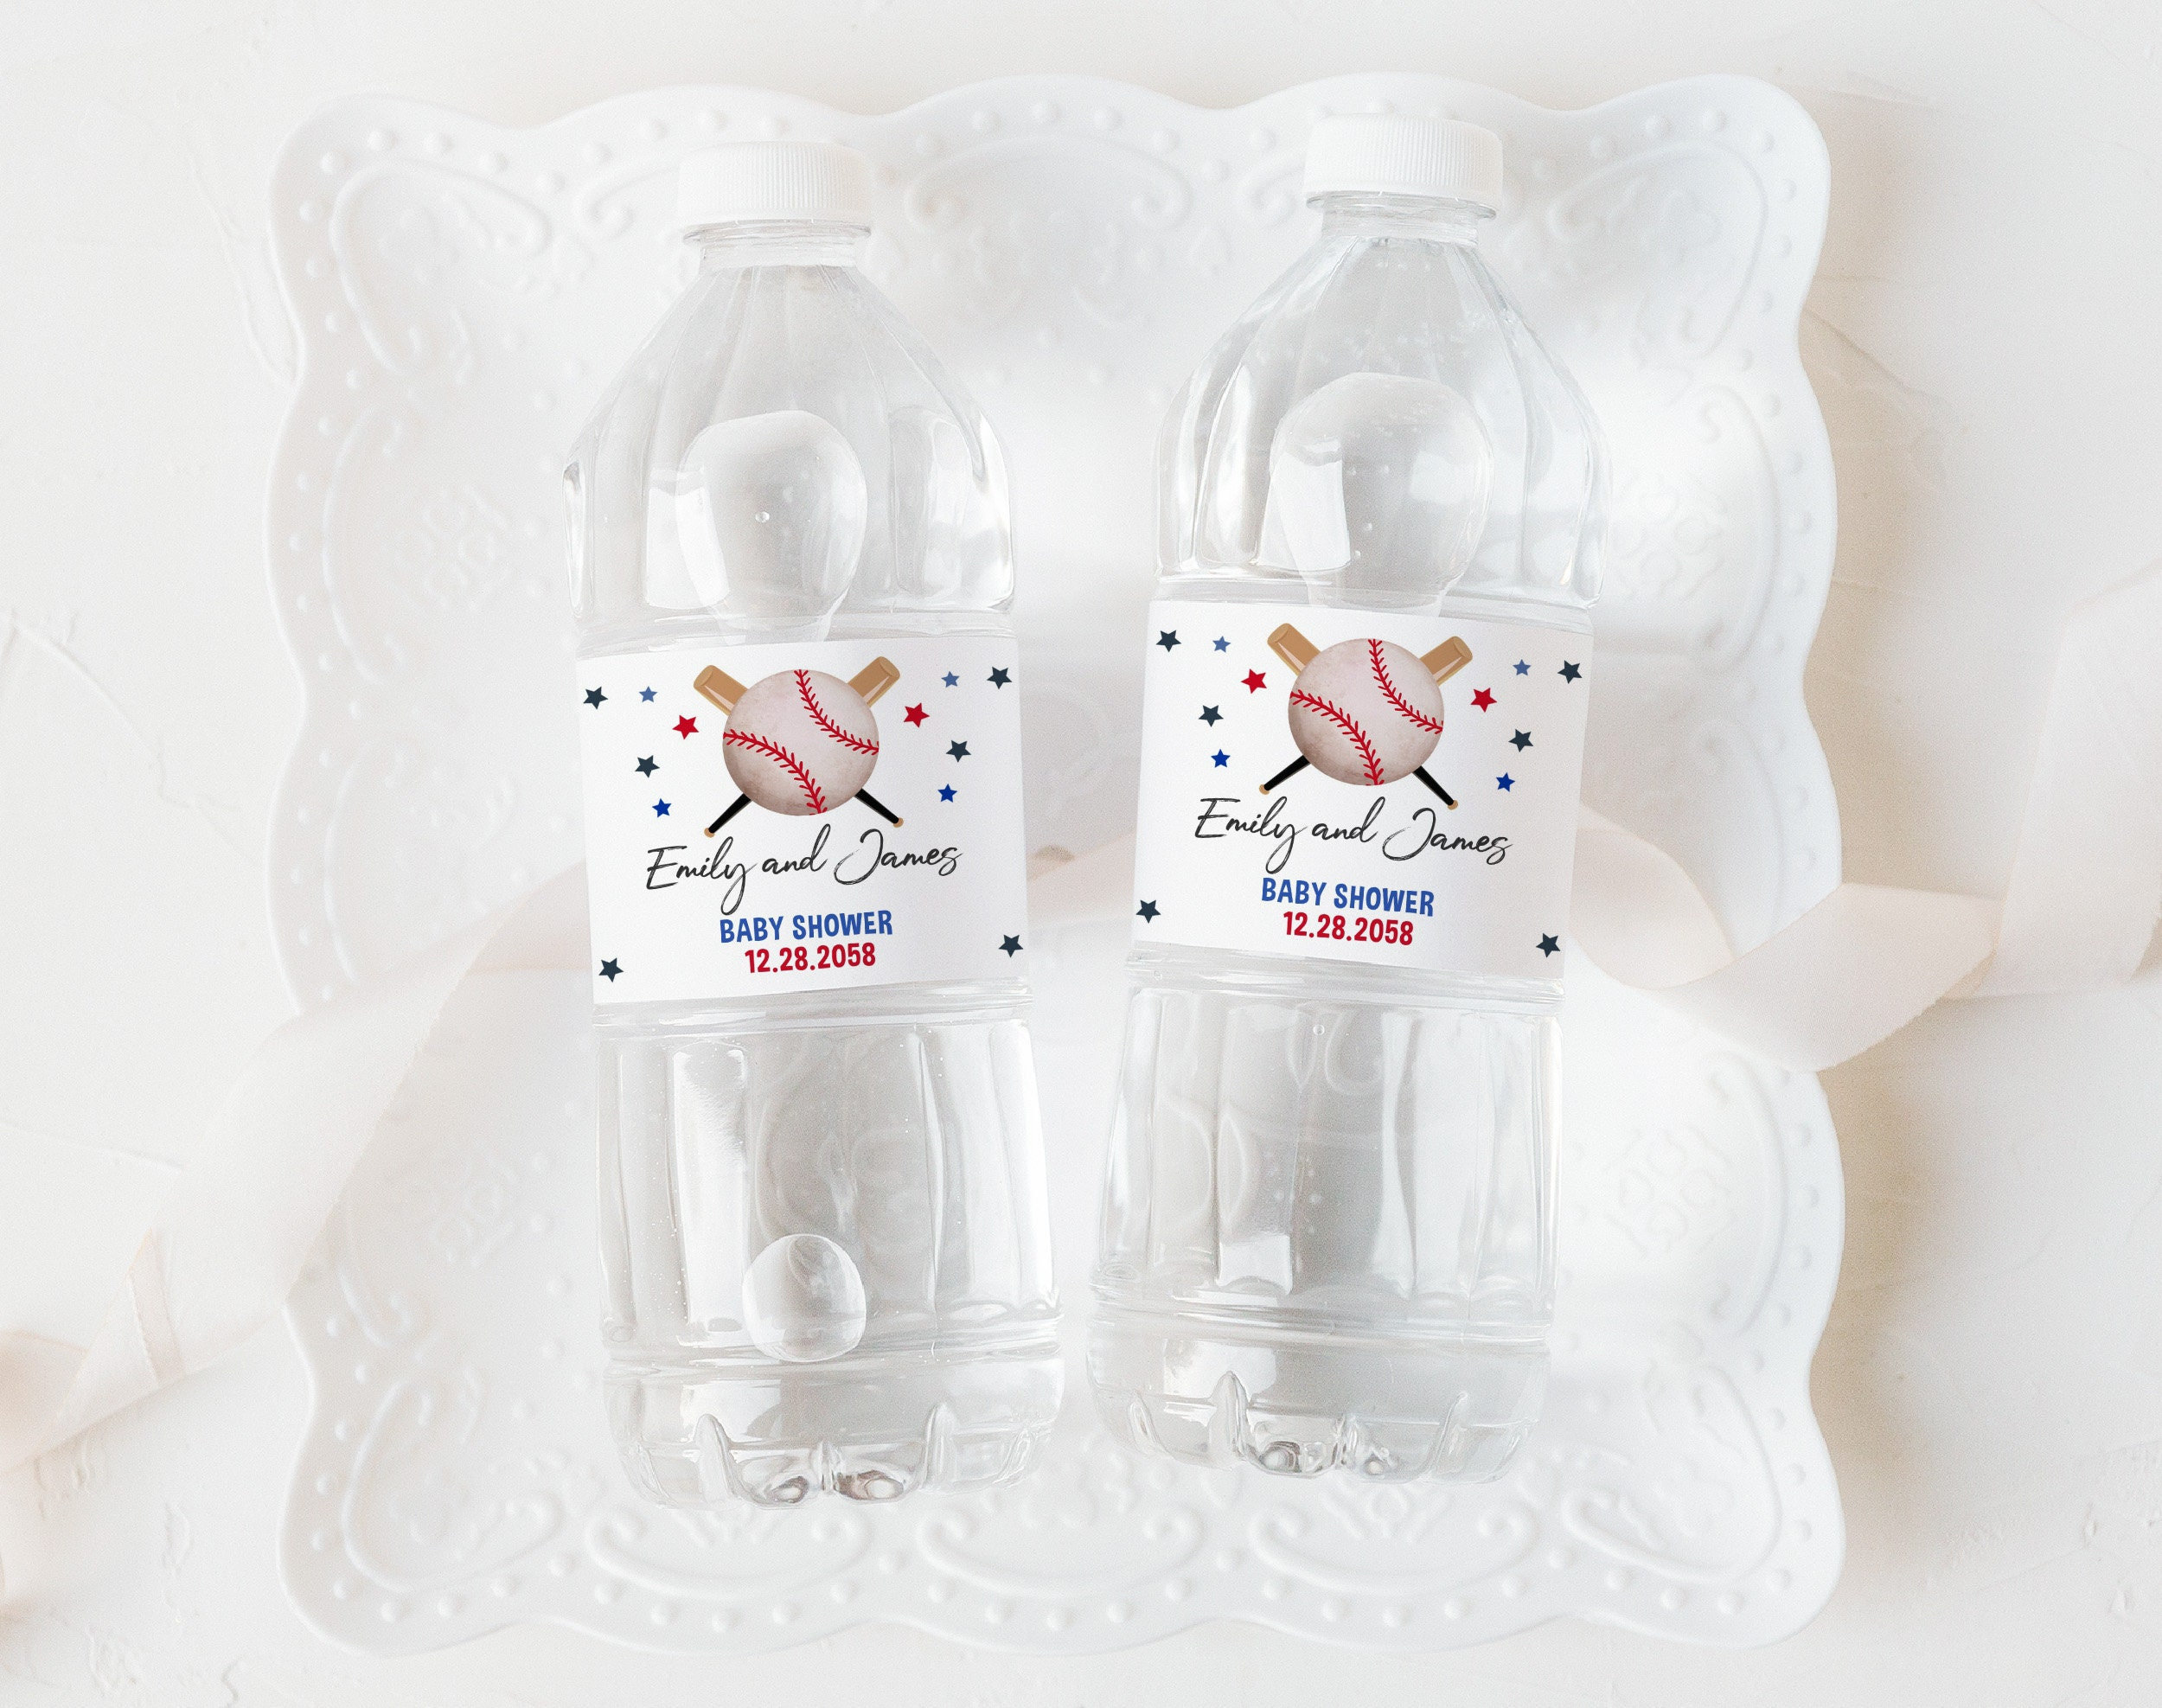 Coowayze 20230710002 64 PcS Waterproof Daycare Labels, Baby Bottle